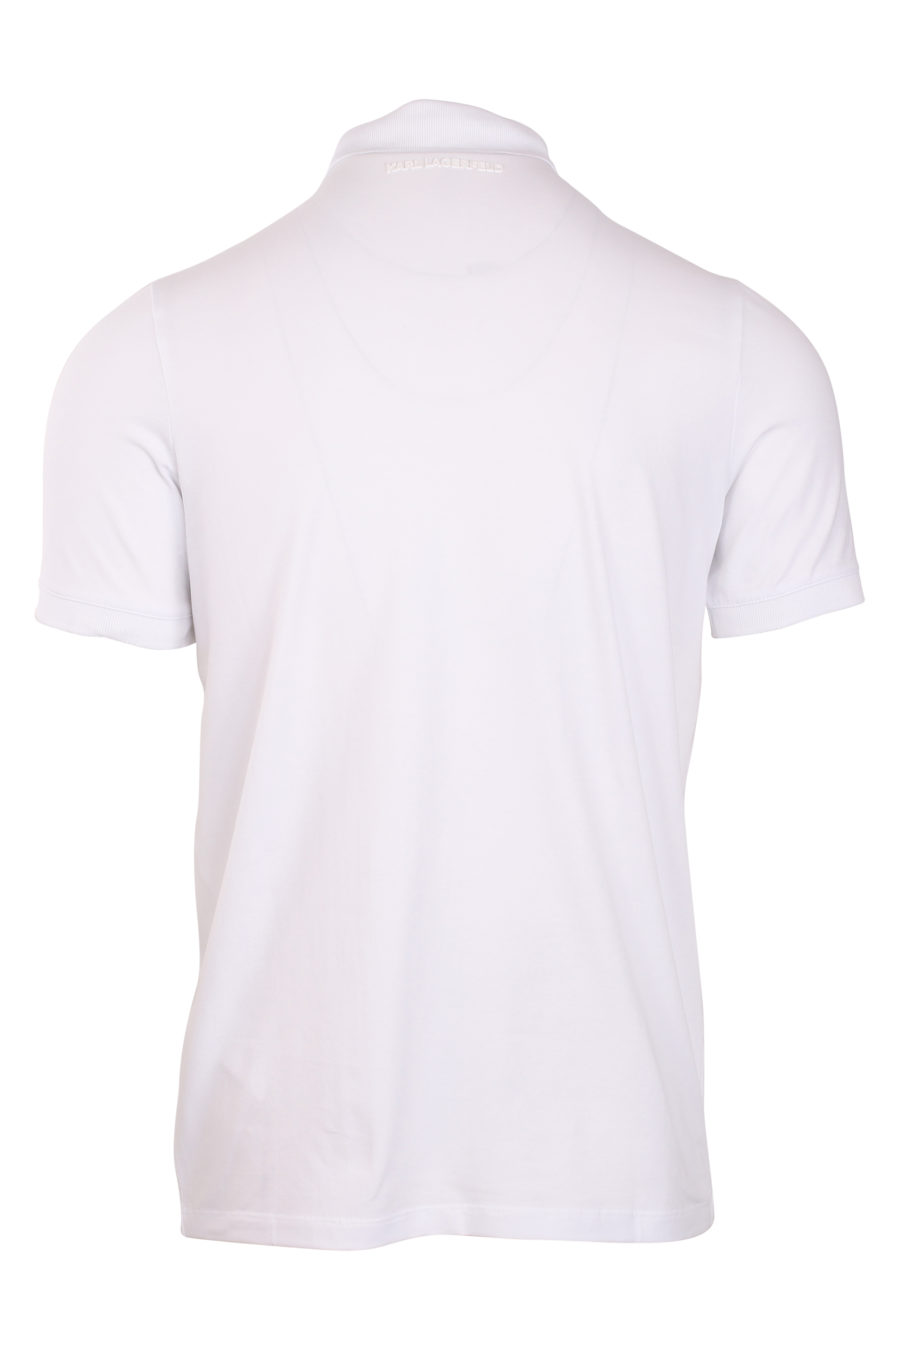 Weißes Poloshirt mit einfarbigem Logo - IMG 0854